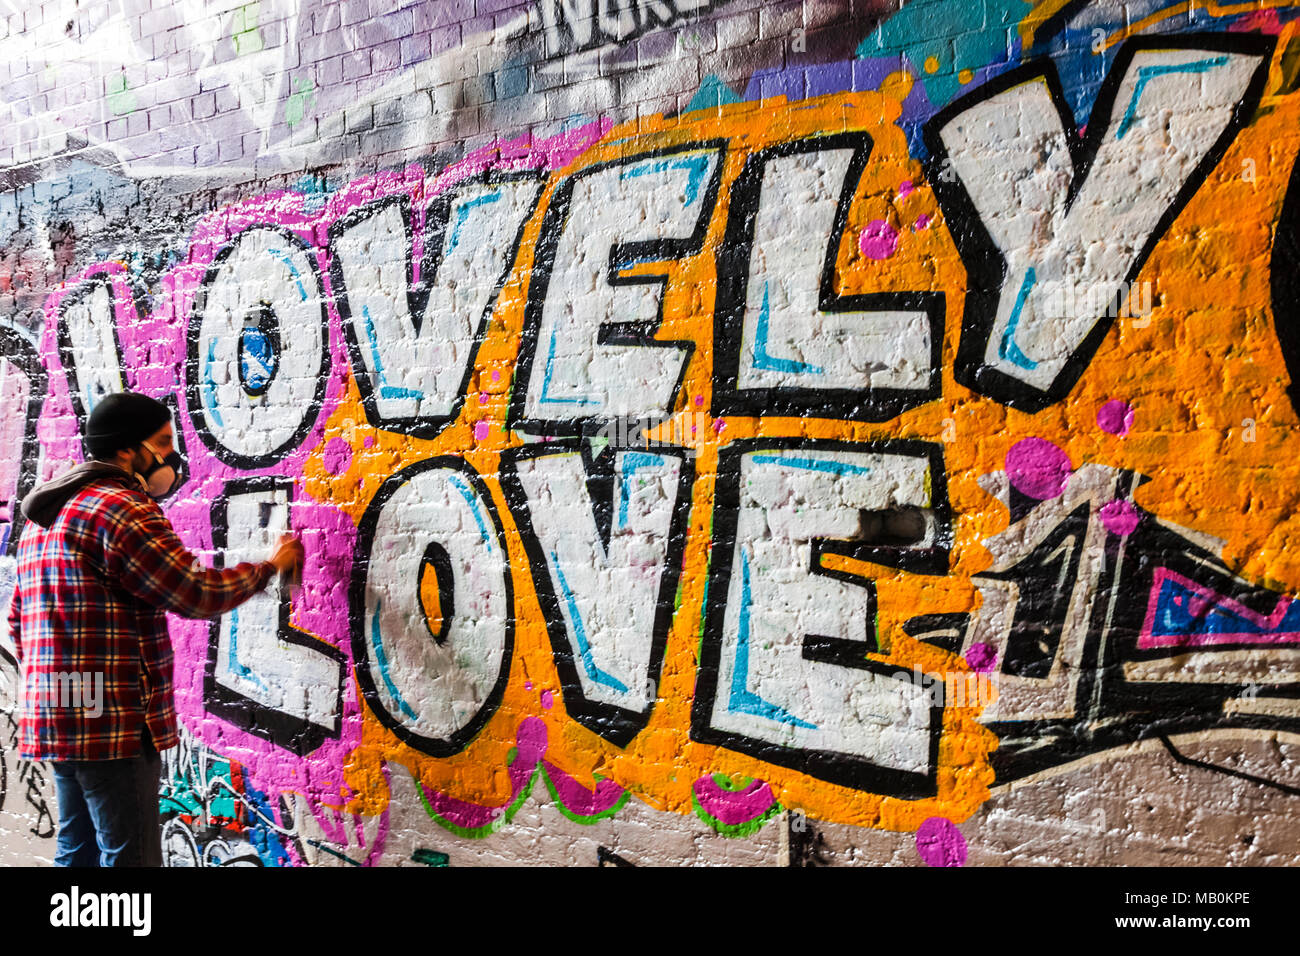 England London Lambeth Waterloo Leake Street Graffiti And Wall Art Tunnel Street Art With Words Lovely Love And Heart Stock Photo Alamy